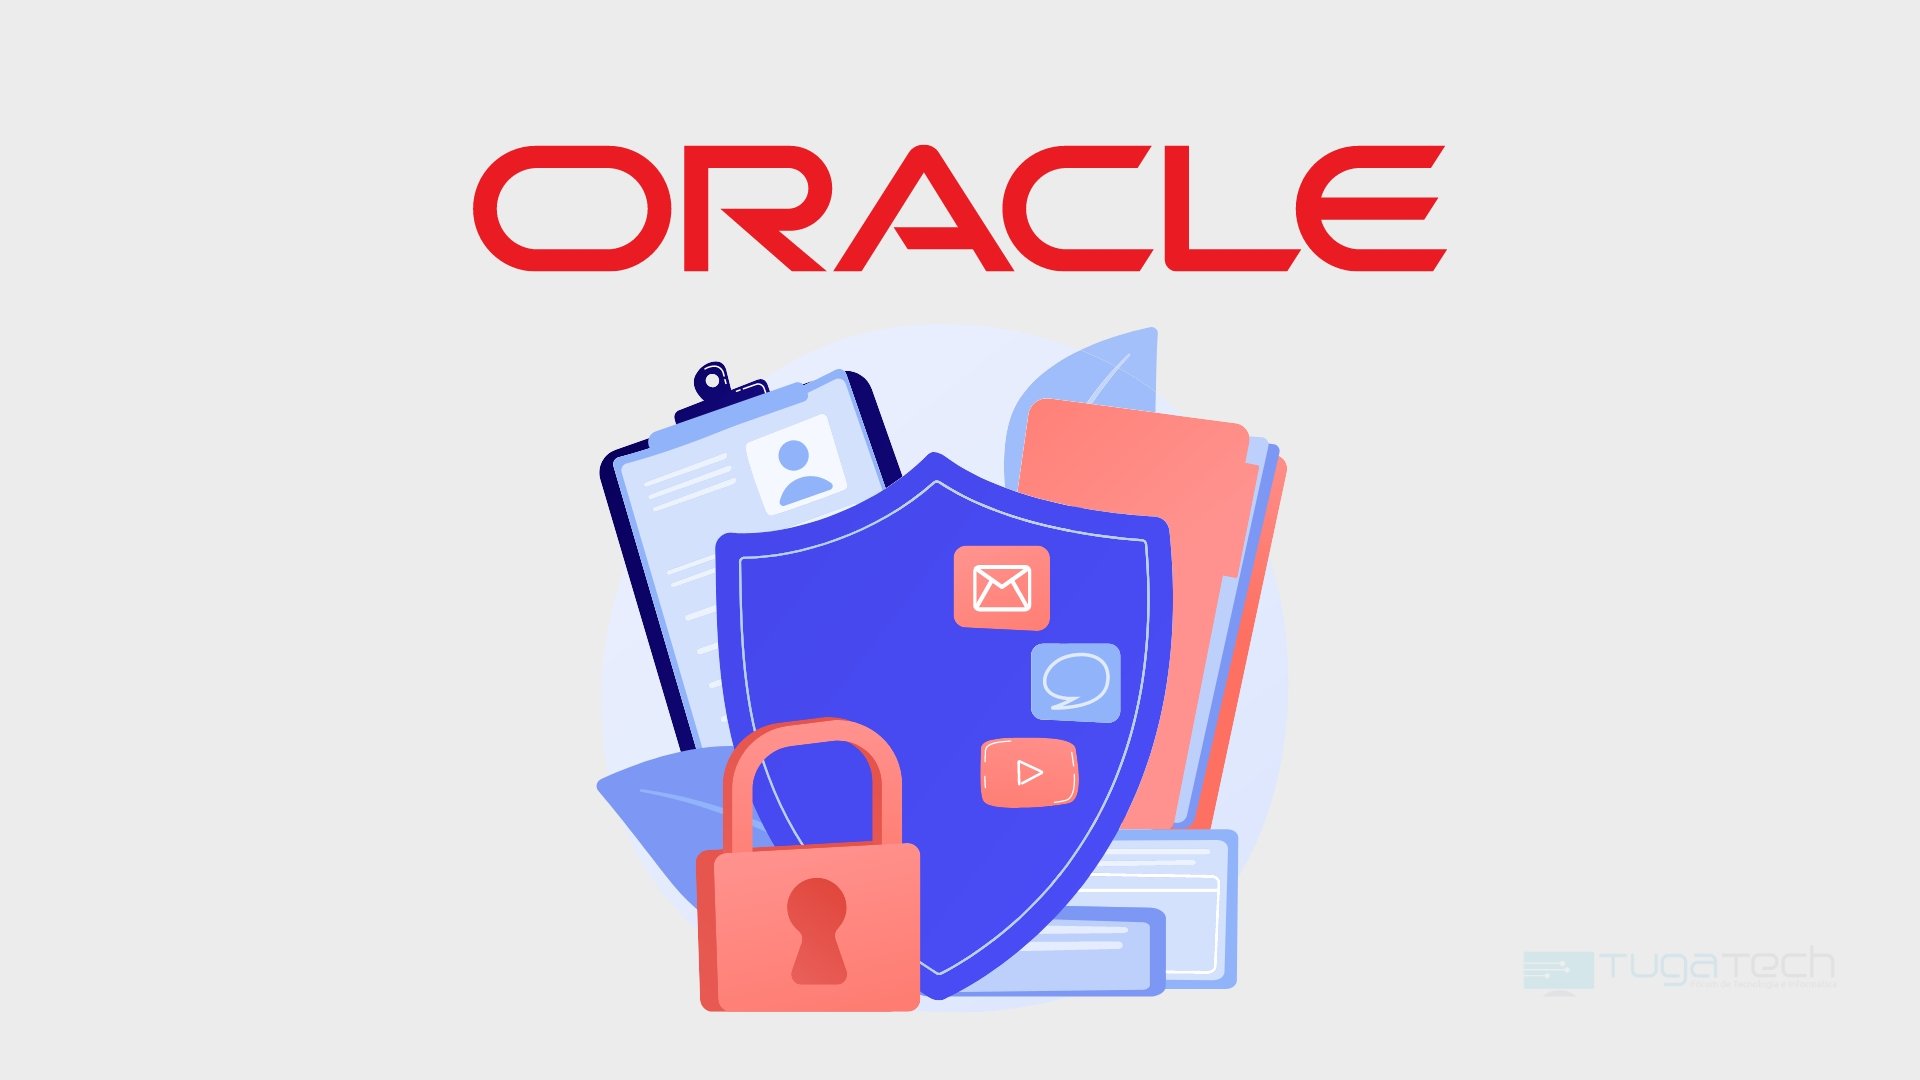 Oracle acusada de recolher e vender dados dos utilizadores